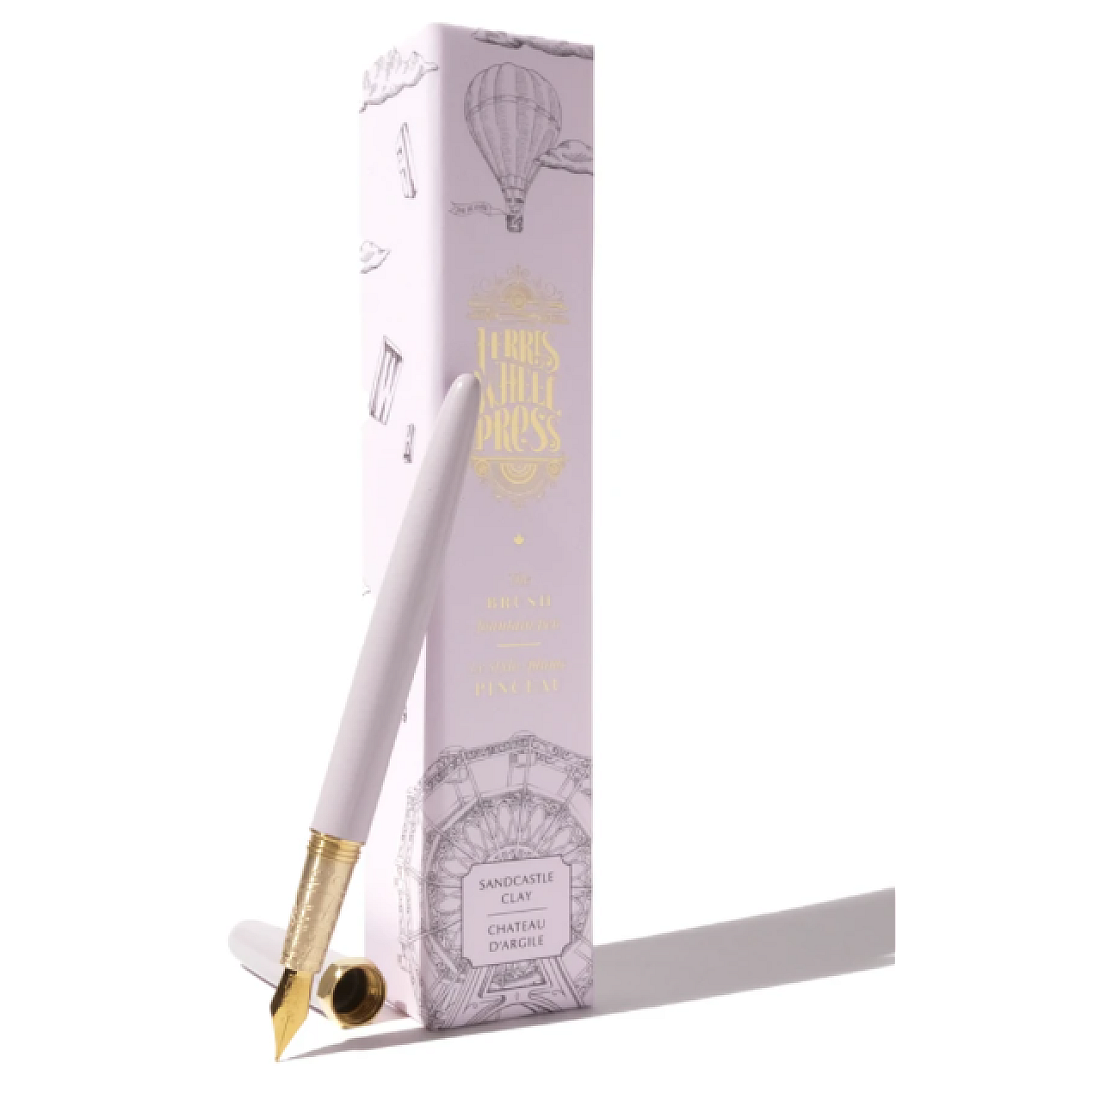 Ferris Wheel Press Brush Crème Glacée White Gold plated Nib Fountain pen